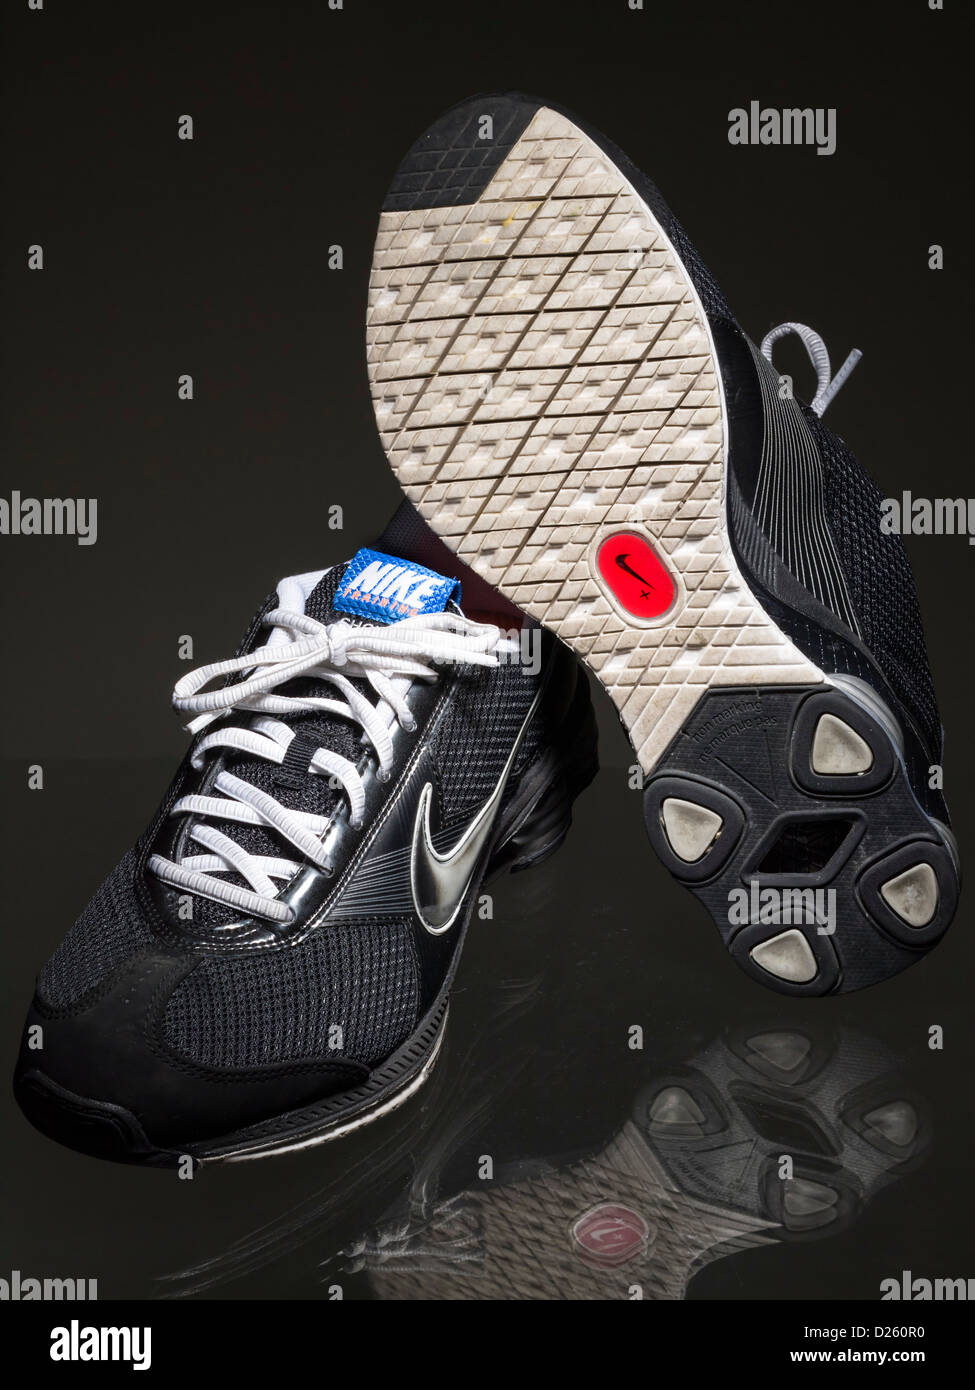 Nike + Sensor Logo auf Running-Schuh-Sohle Stockfotografie - Alamy